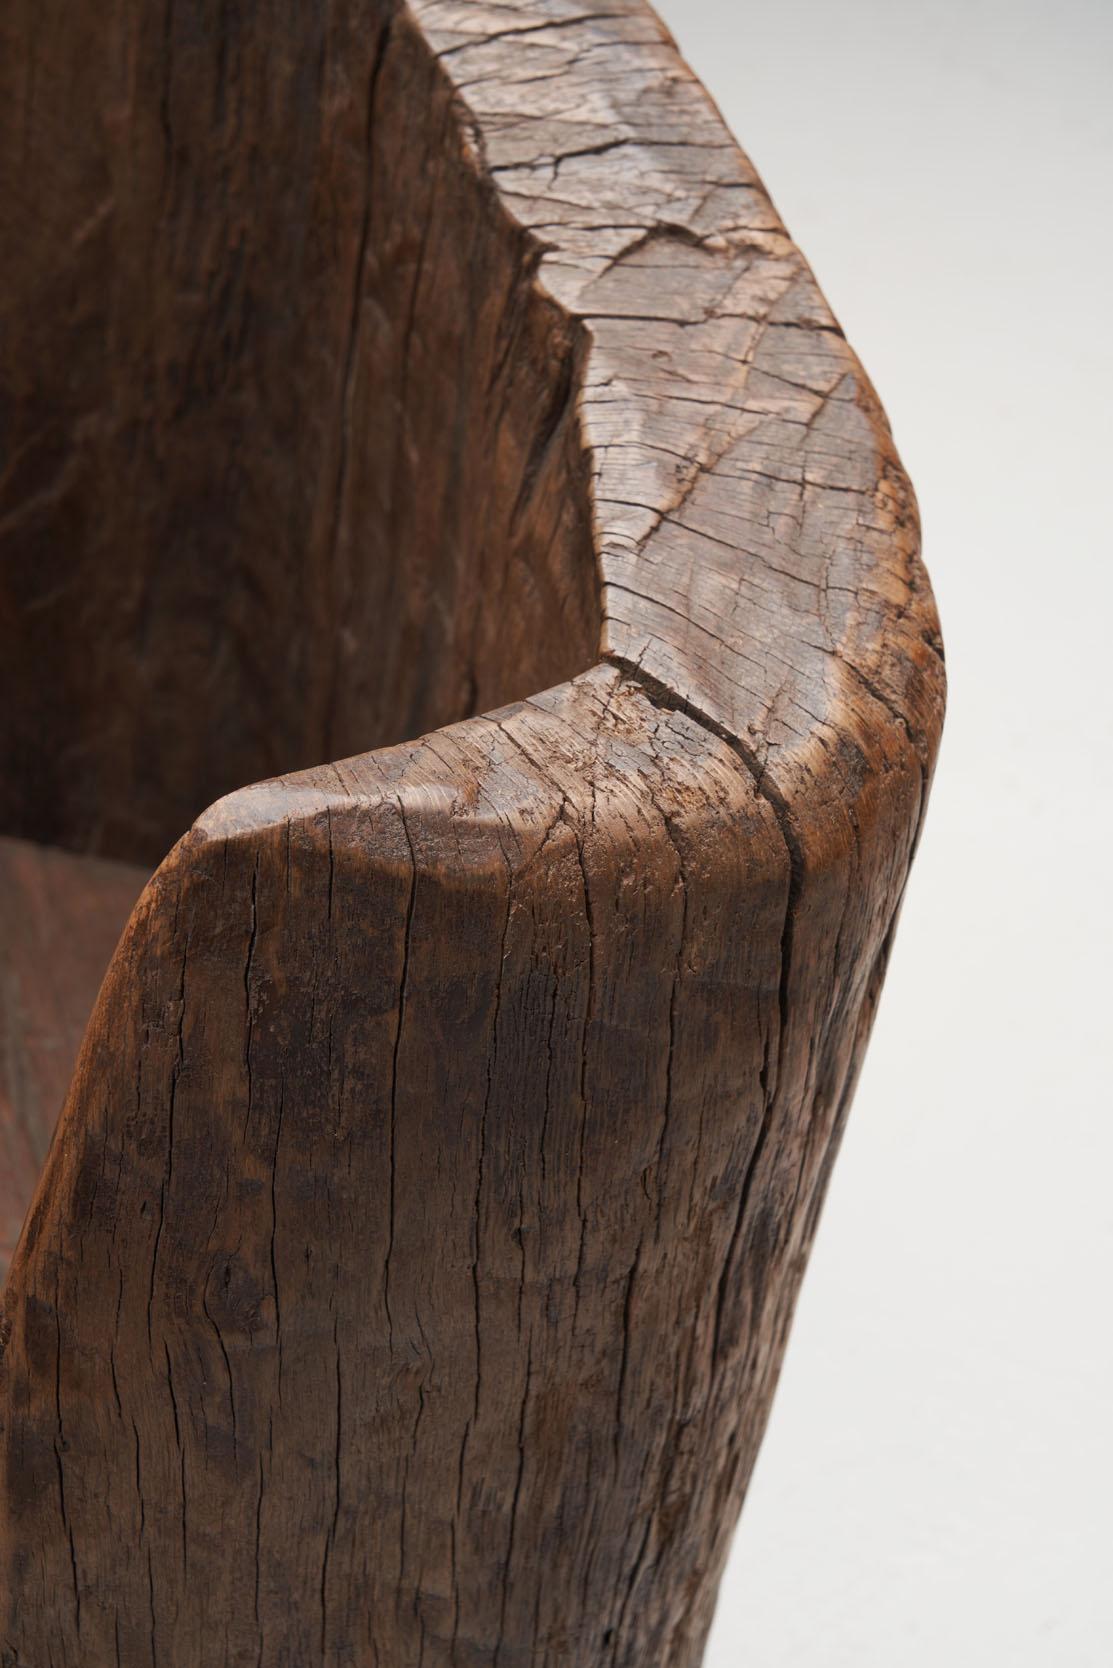 Tibetan Carved Wood “Tête a Tête” Love Seat, Tibet 19th Century For Sale 6